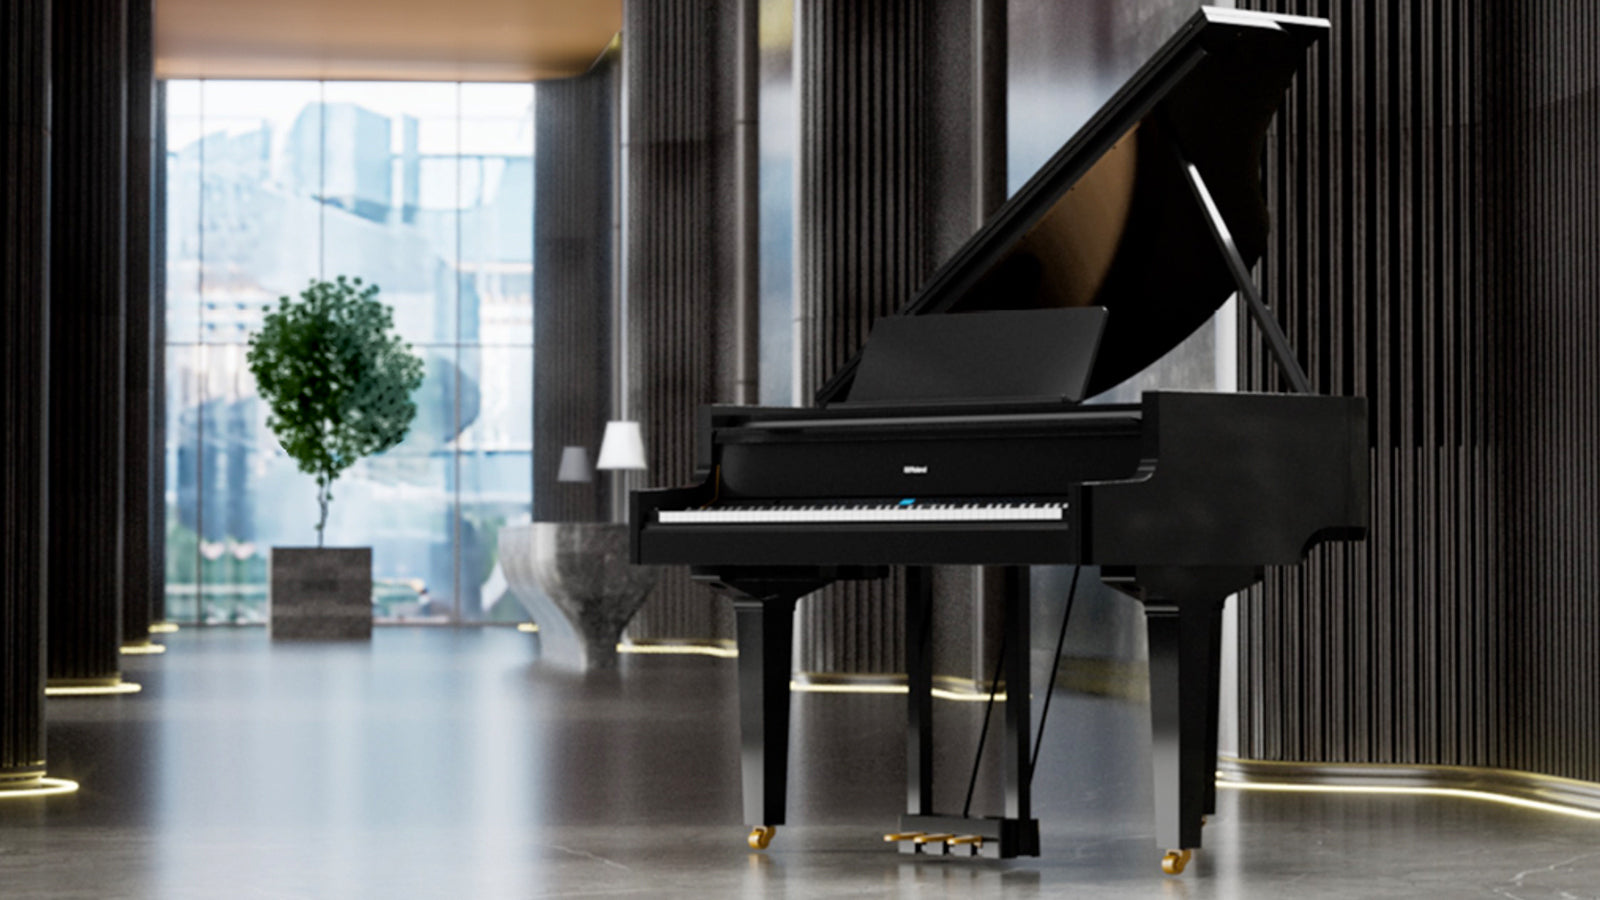 A Roland grand piano in a lobby